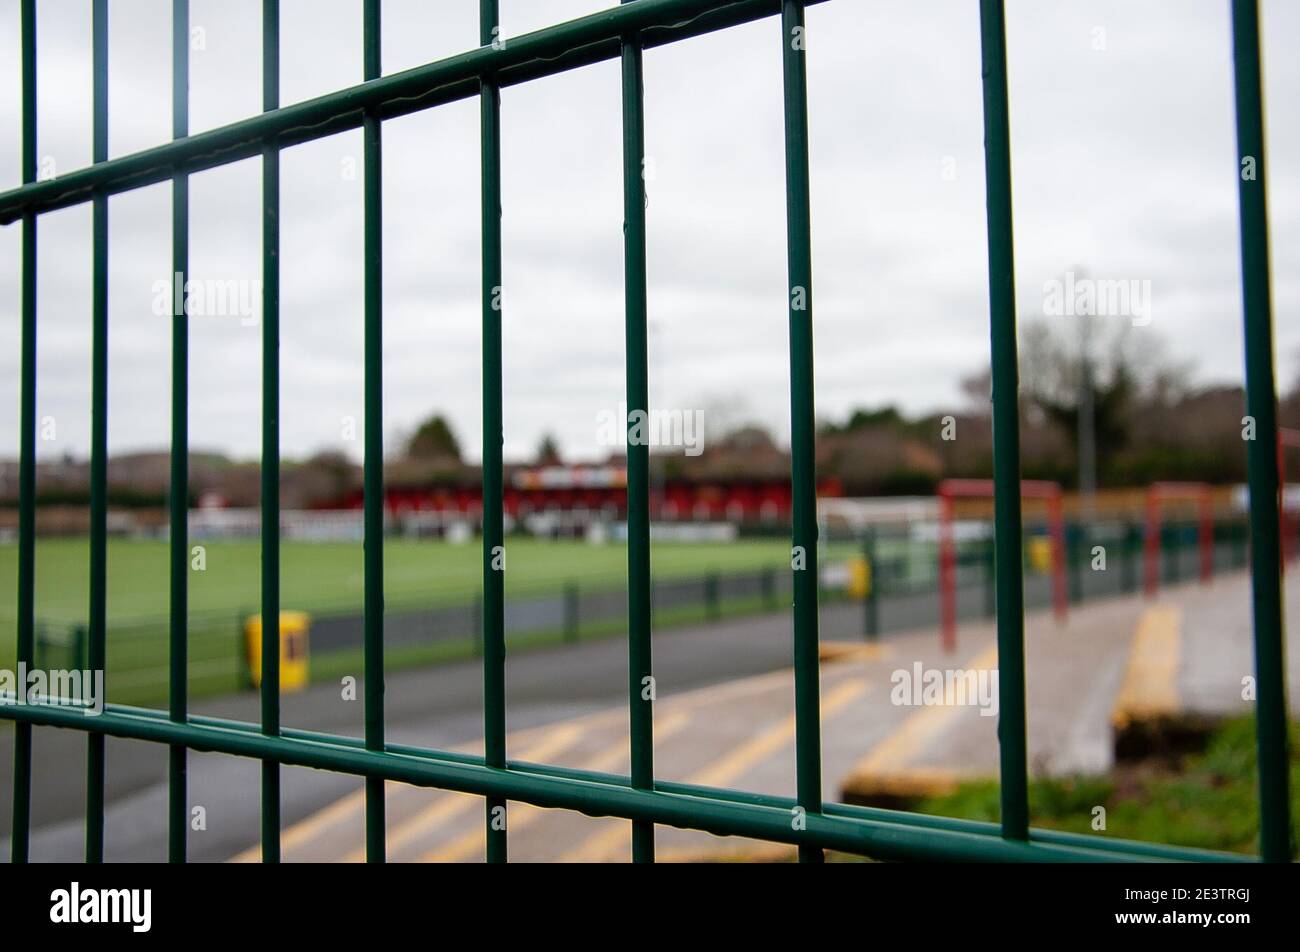 Birmingham, UK. 20th Jan, 2021. Redditch Utd - Trico Stadium Football Ground closed for fans during Covid-19 National Lockdown #3 Credit: SPP Sport Press Photo. /Alamy Live News Stock Photo